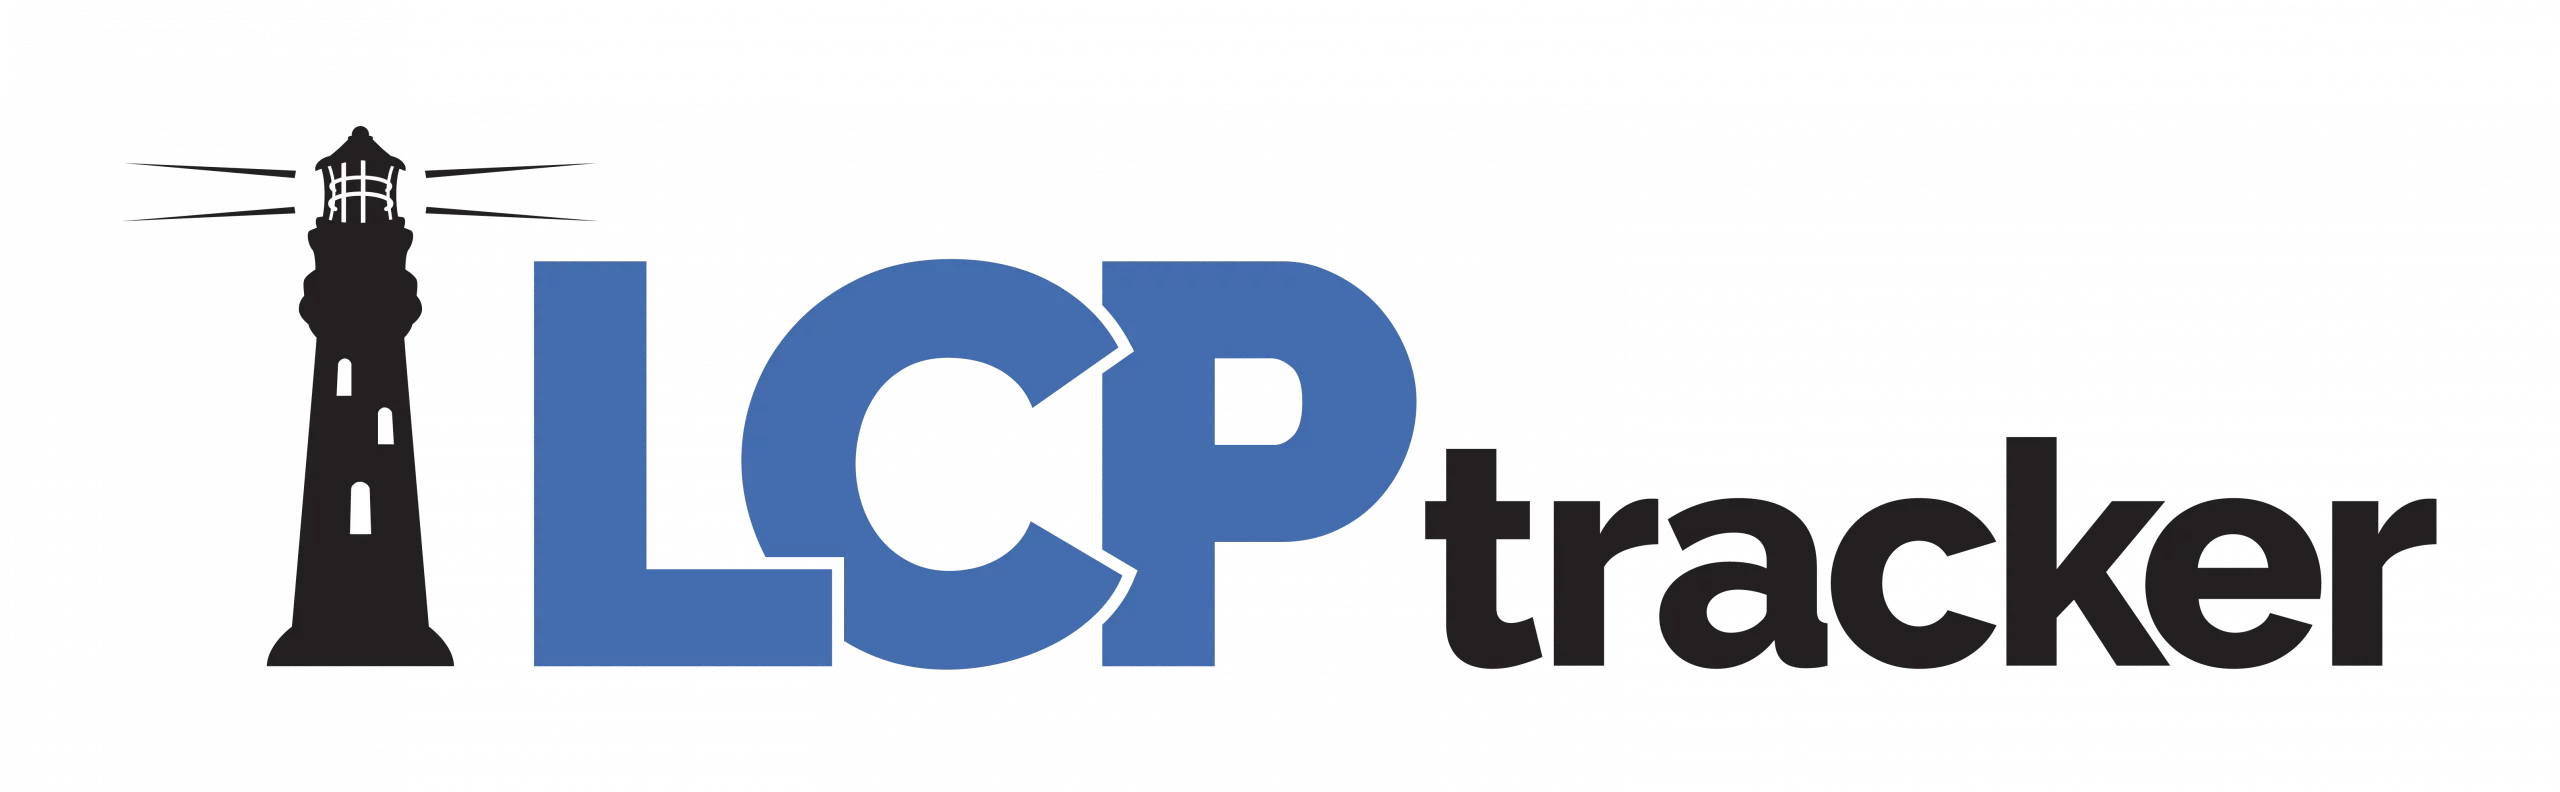 LCP tracker logo